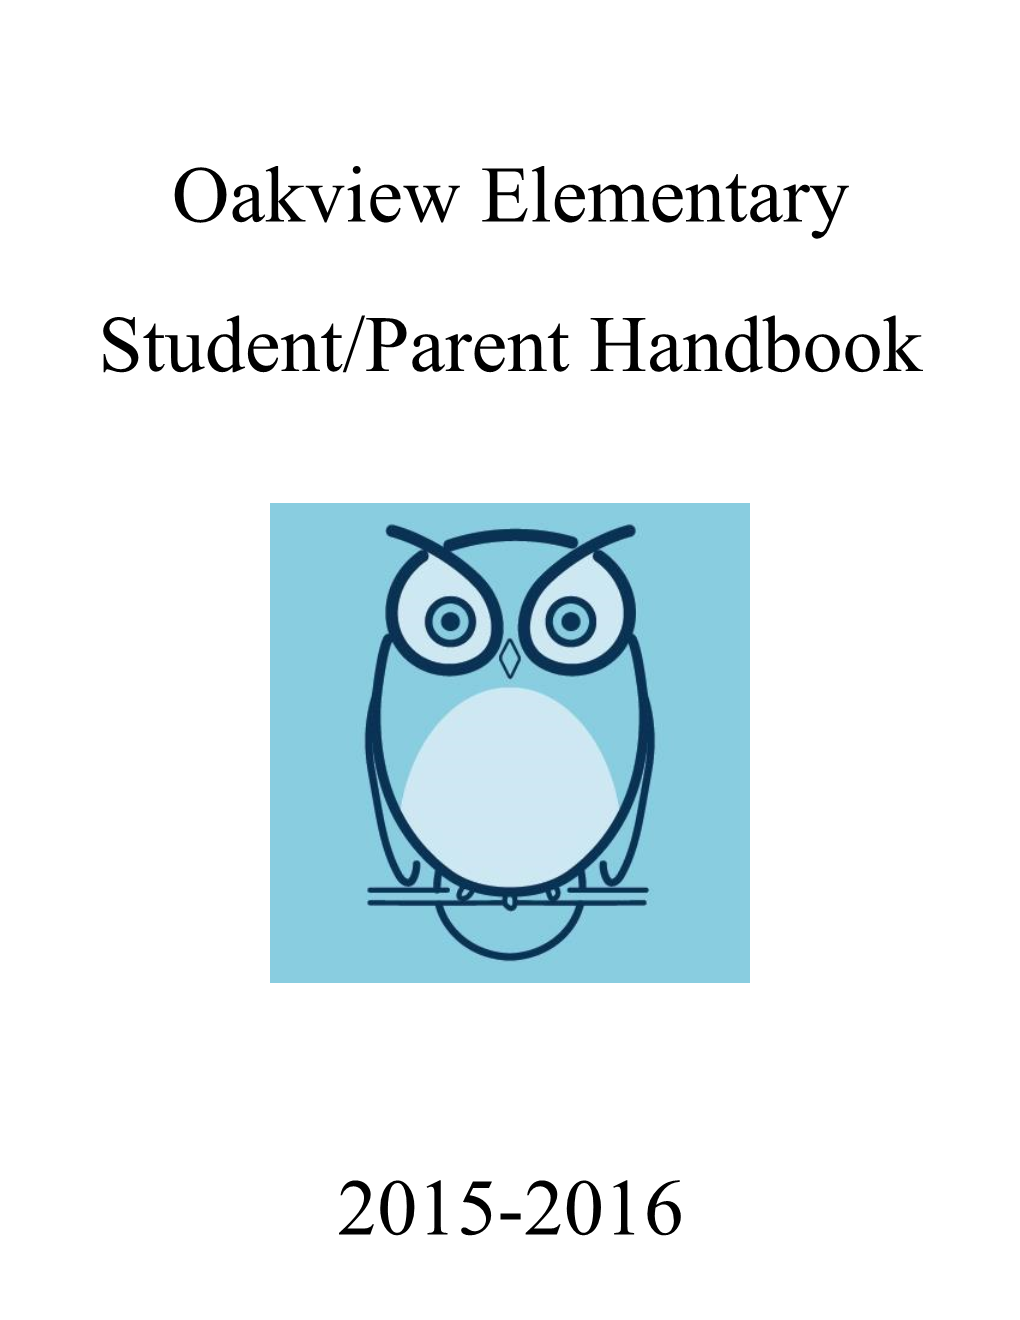 Oakview Elementary Student/Parent Handbook 2015-2016